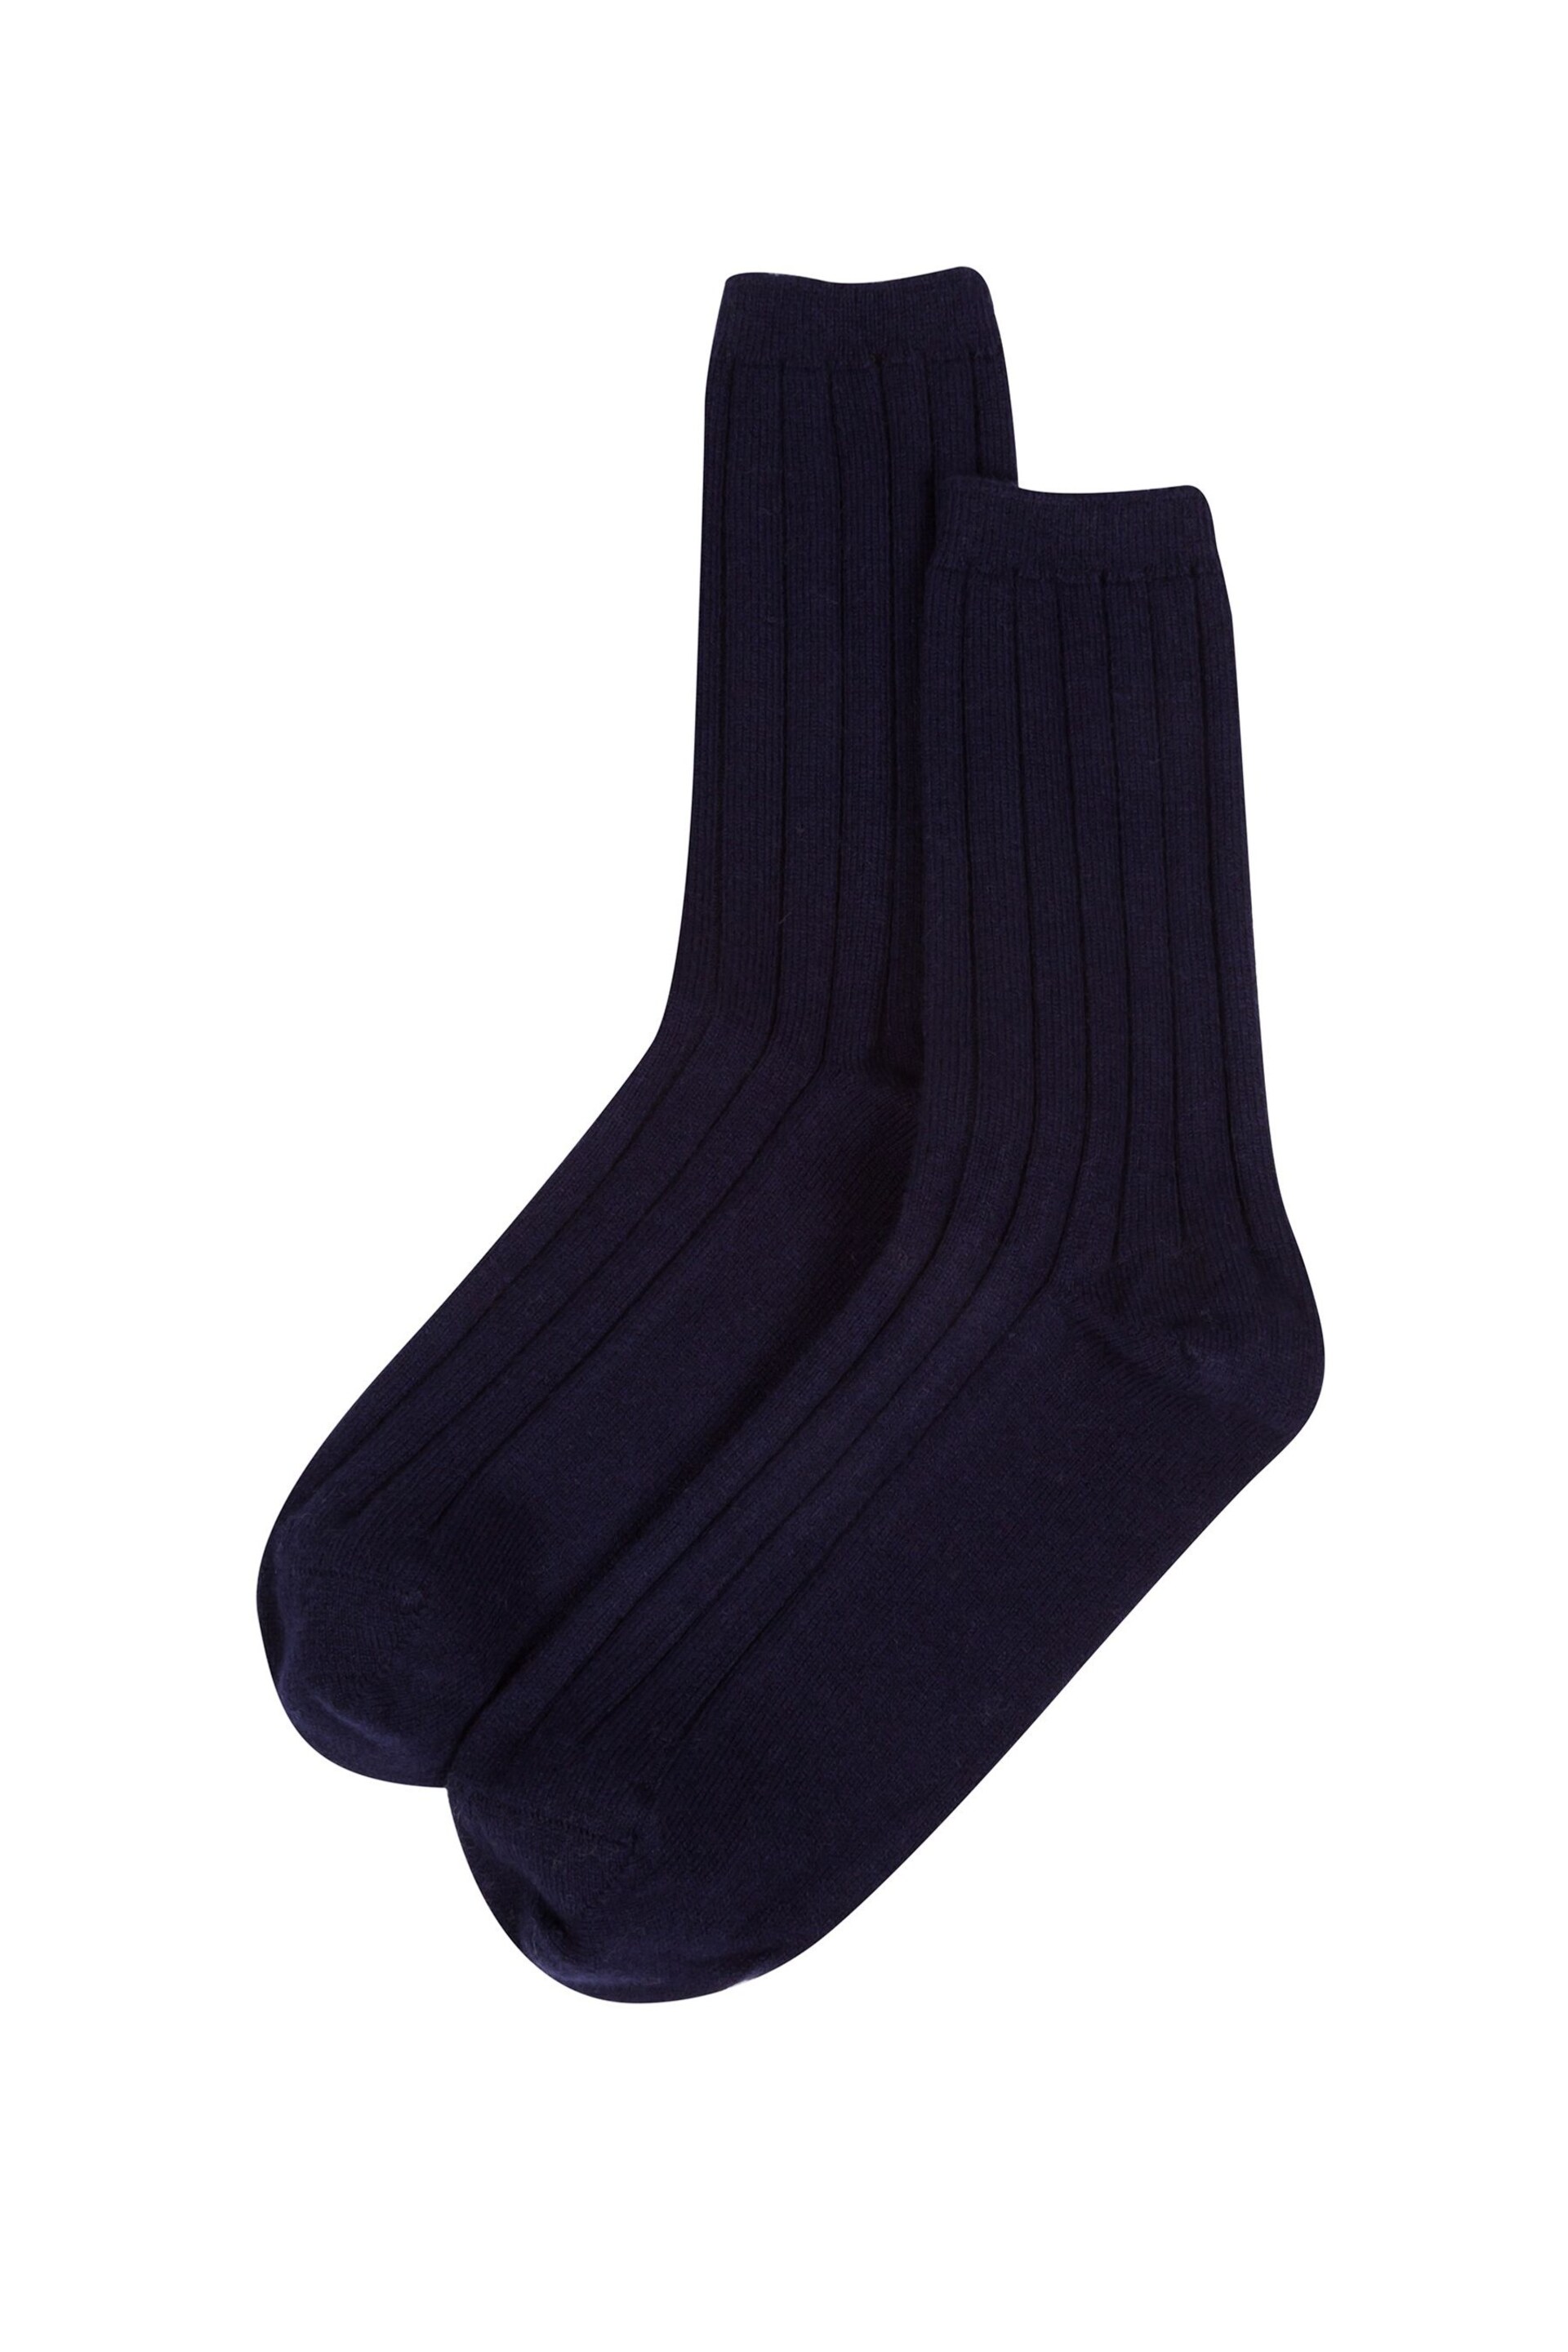 Pure Luxuries London Dalton Cashmere & Merino Wool Ribbed Socks - Image 1 of 3